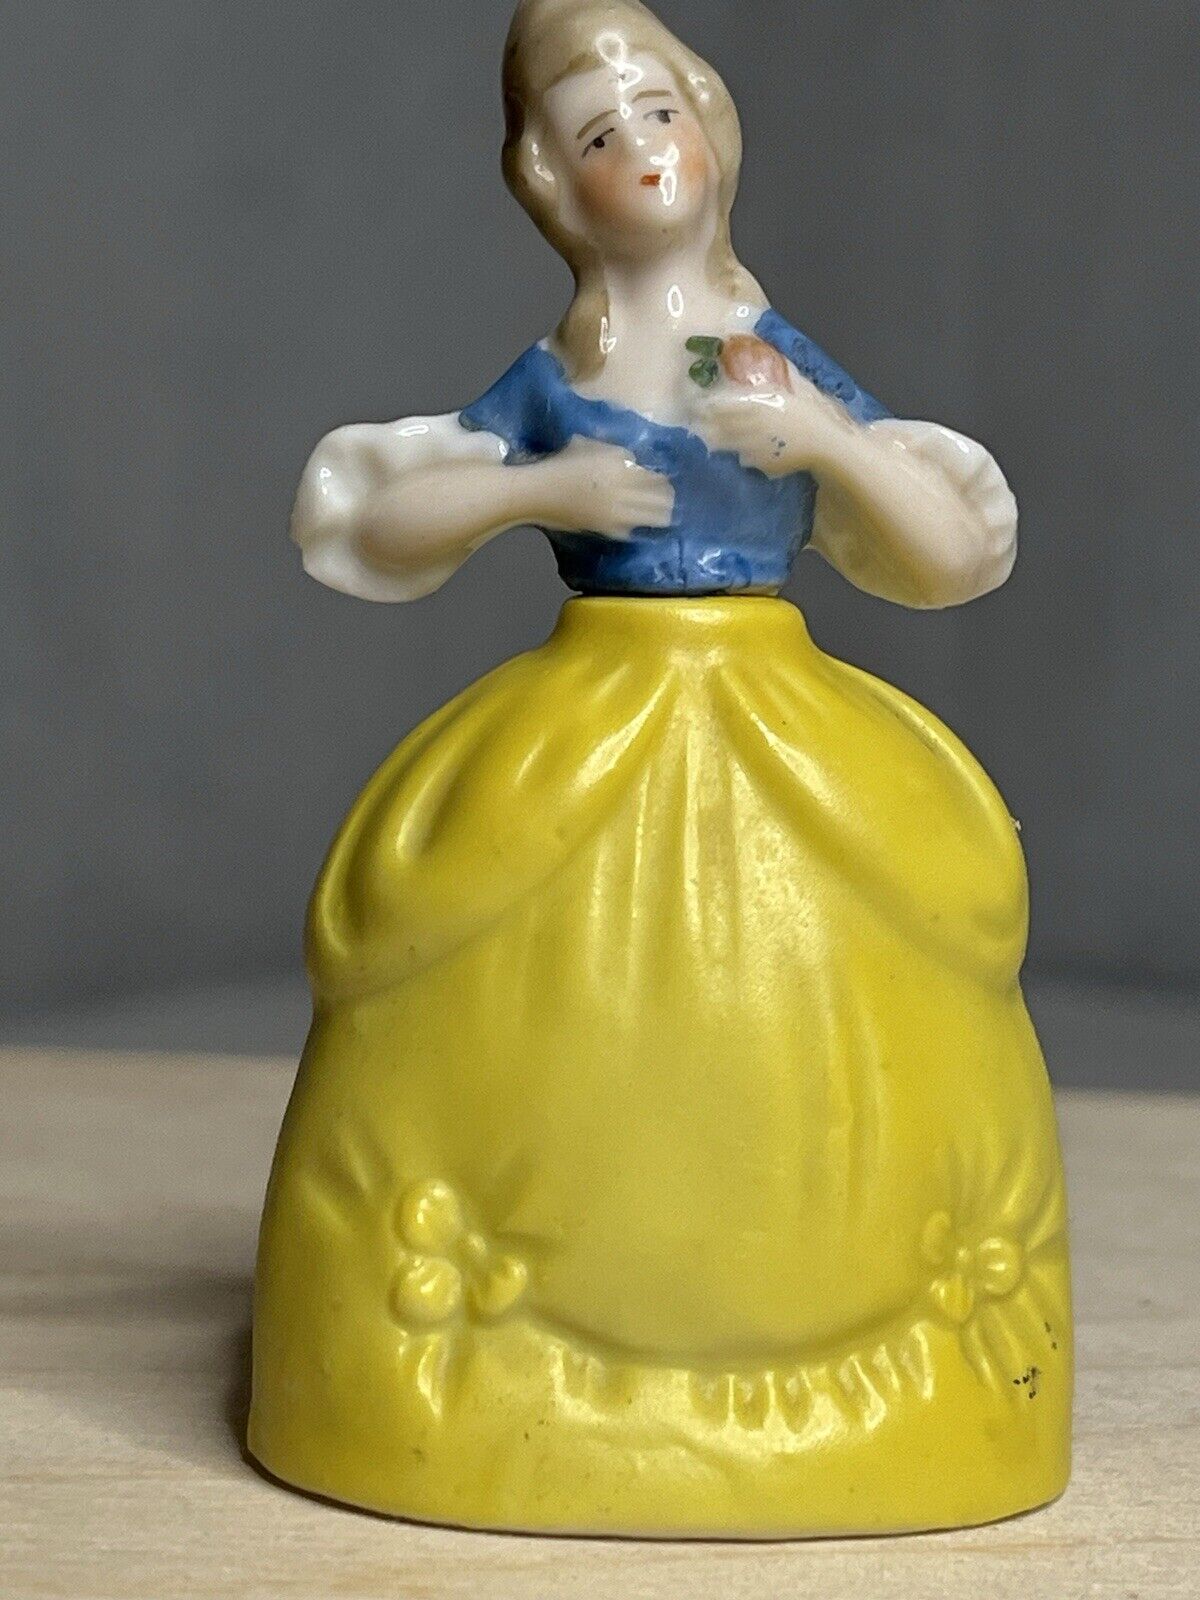 Antique German Victorian Lady perfume bottle jar (NO GLASS DAUBER), Beautiful